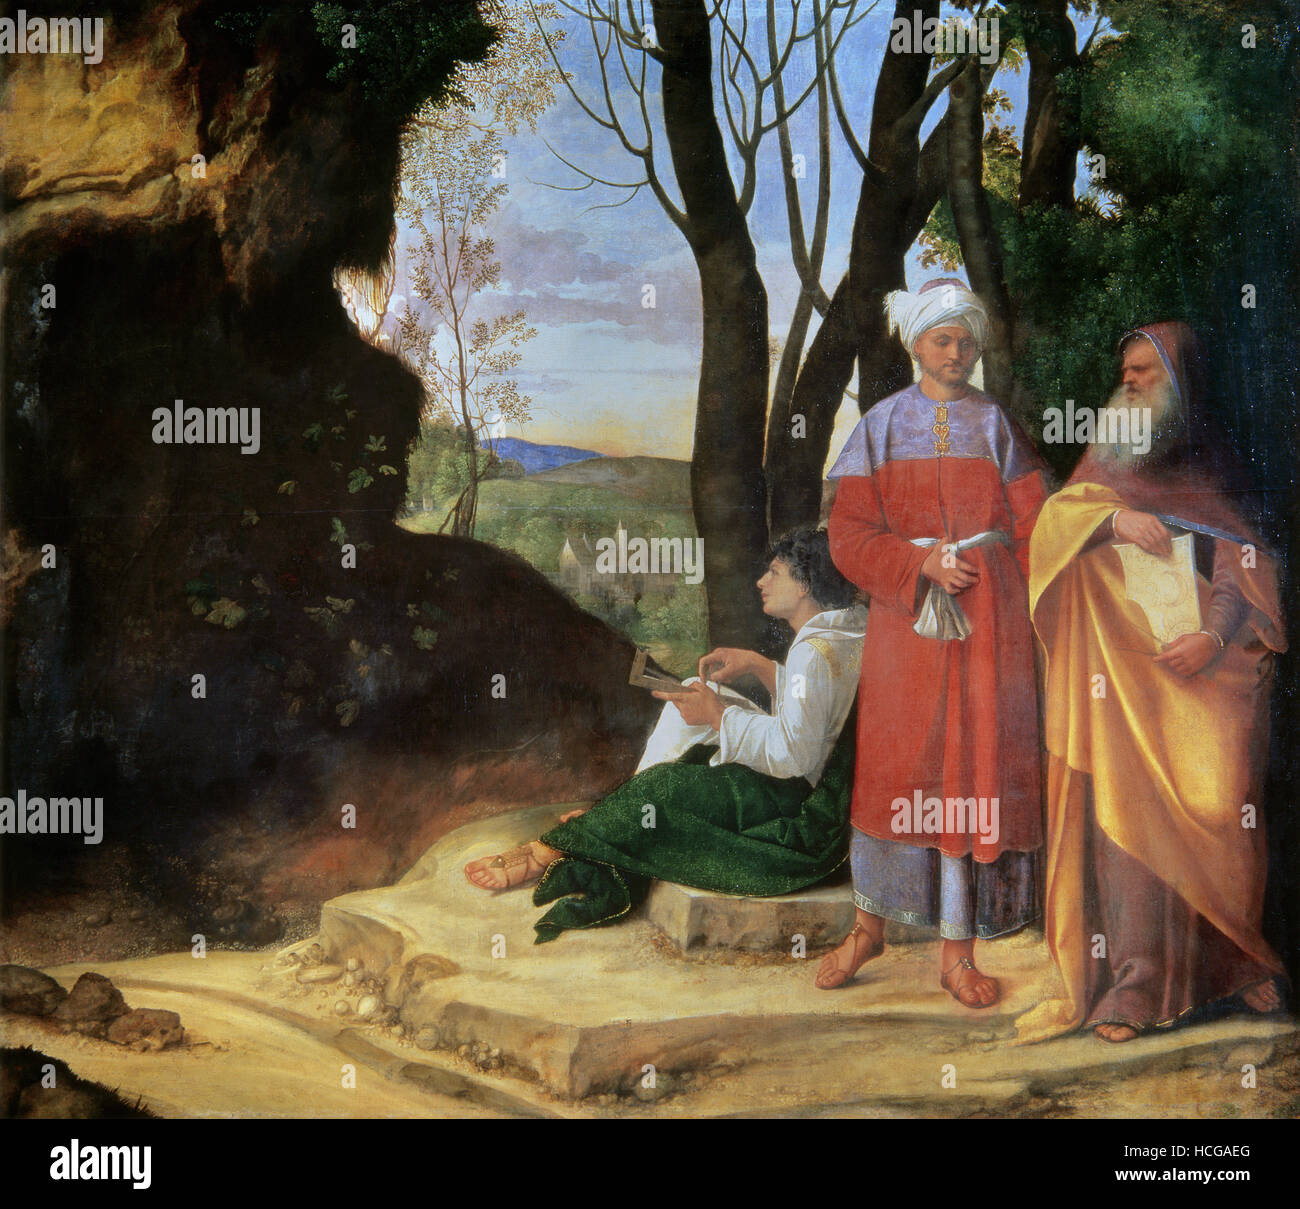 Giorgio Barbarelli Giorgione - Le savoir que trois philosophes - 1508 Banque D'Images